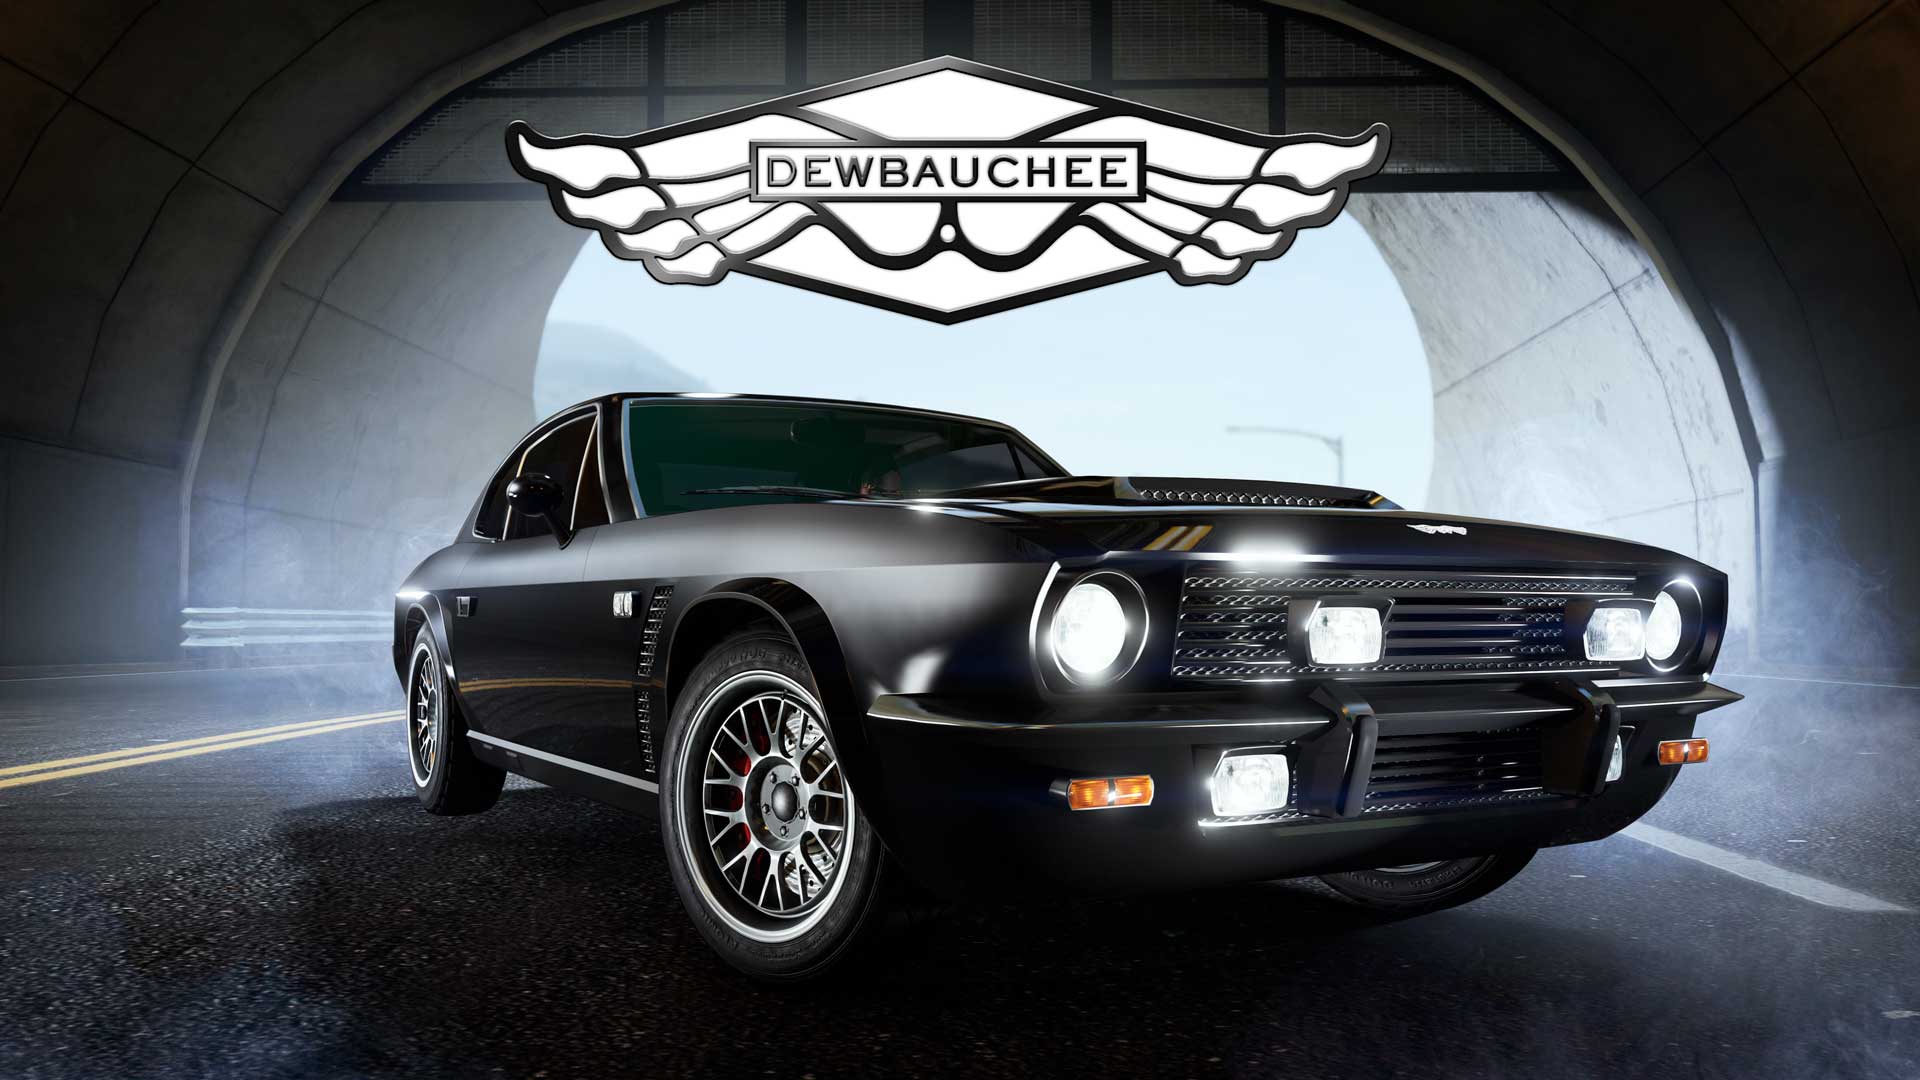 GTA Online promo art for Dewbauchee cars